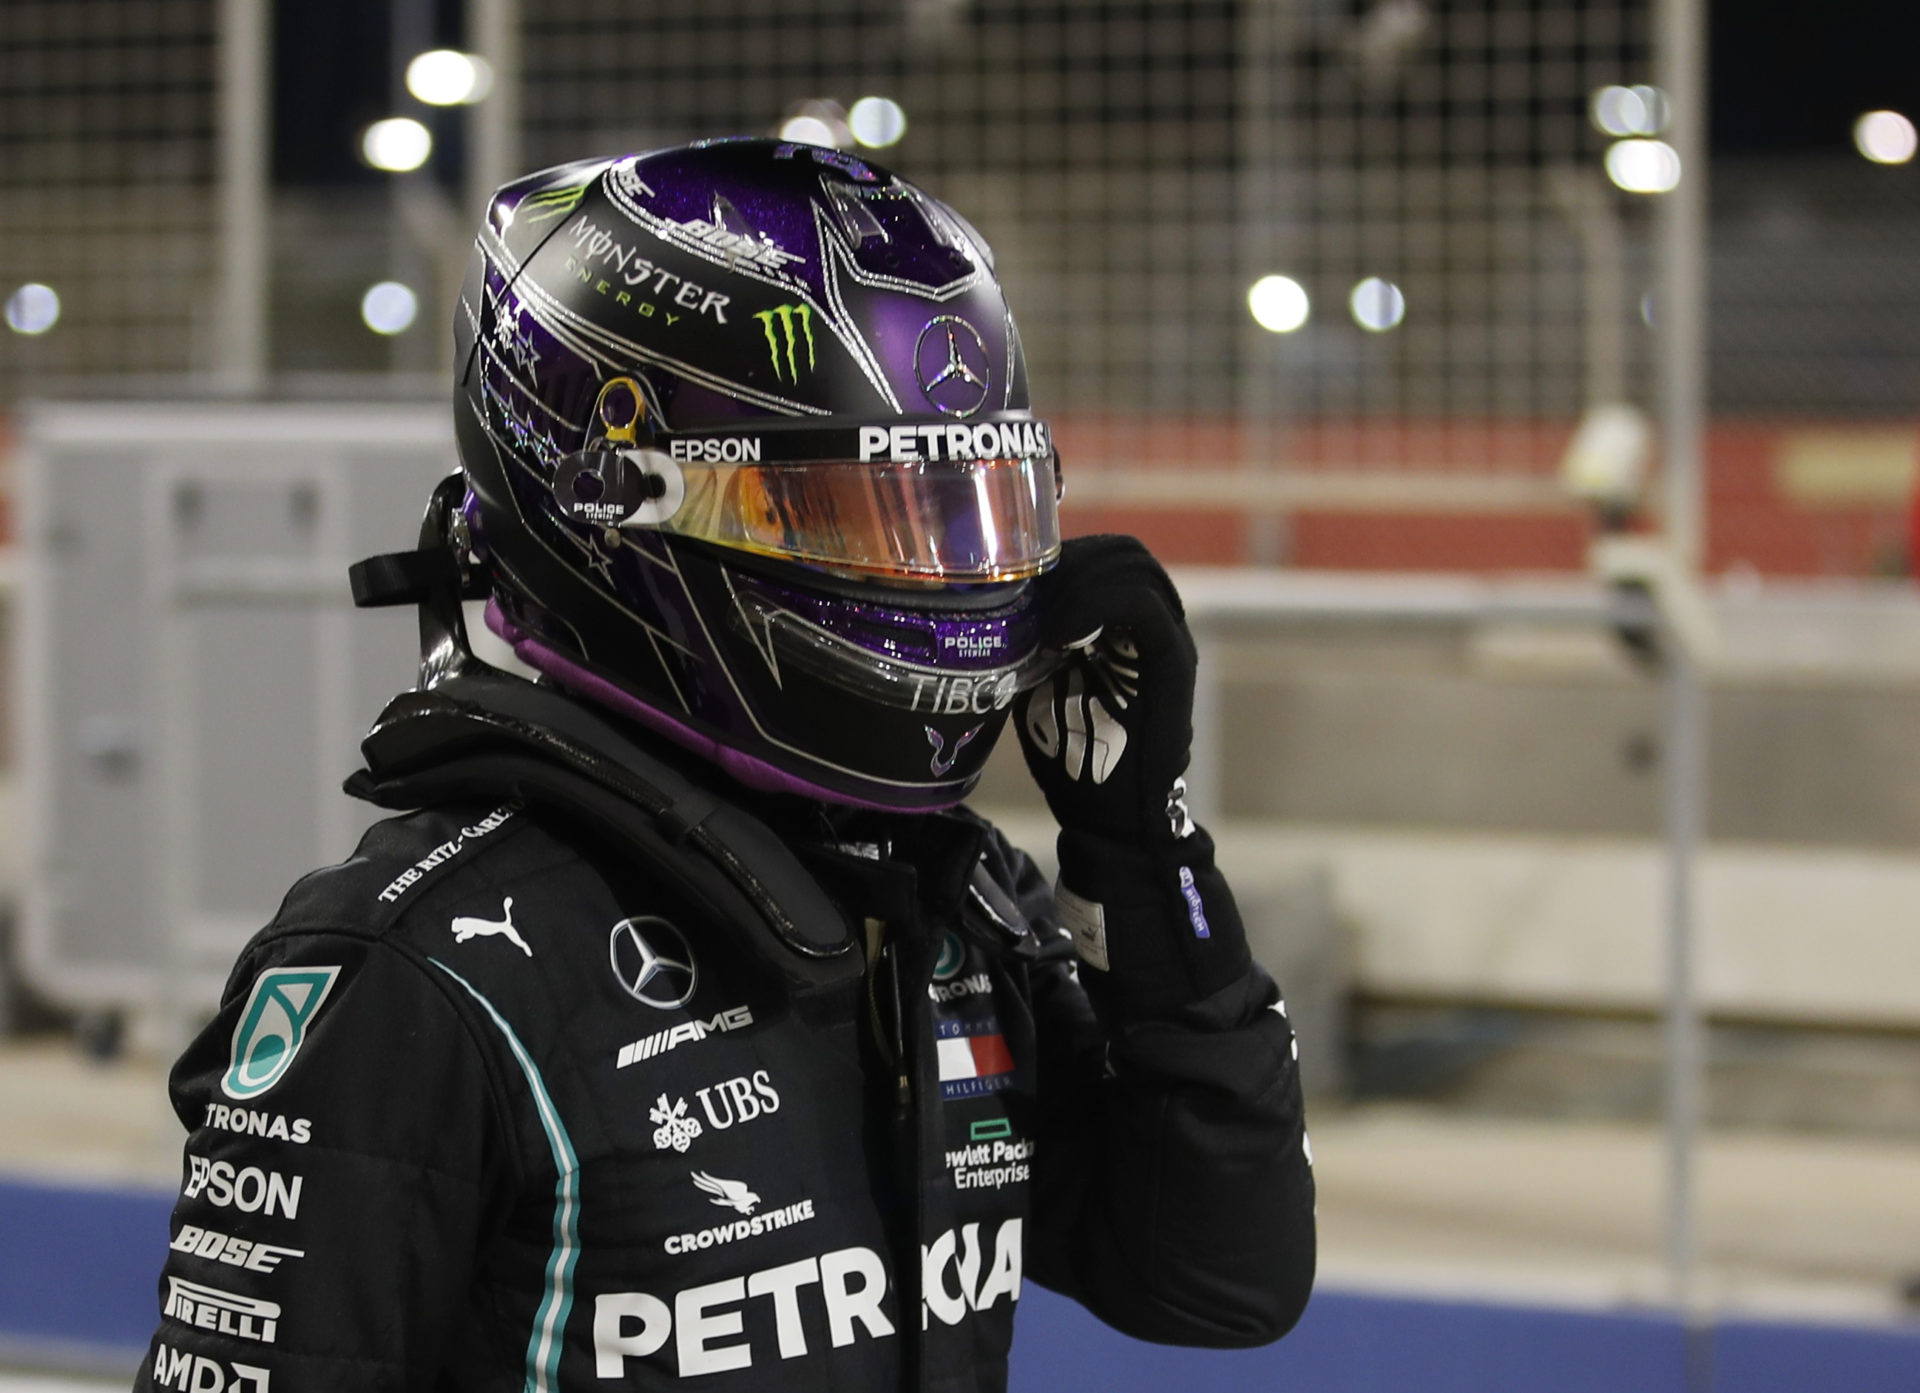 Lewis Hamilton Wins Chaotic Bahrain GP, Grosjean Survives Horror Crash